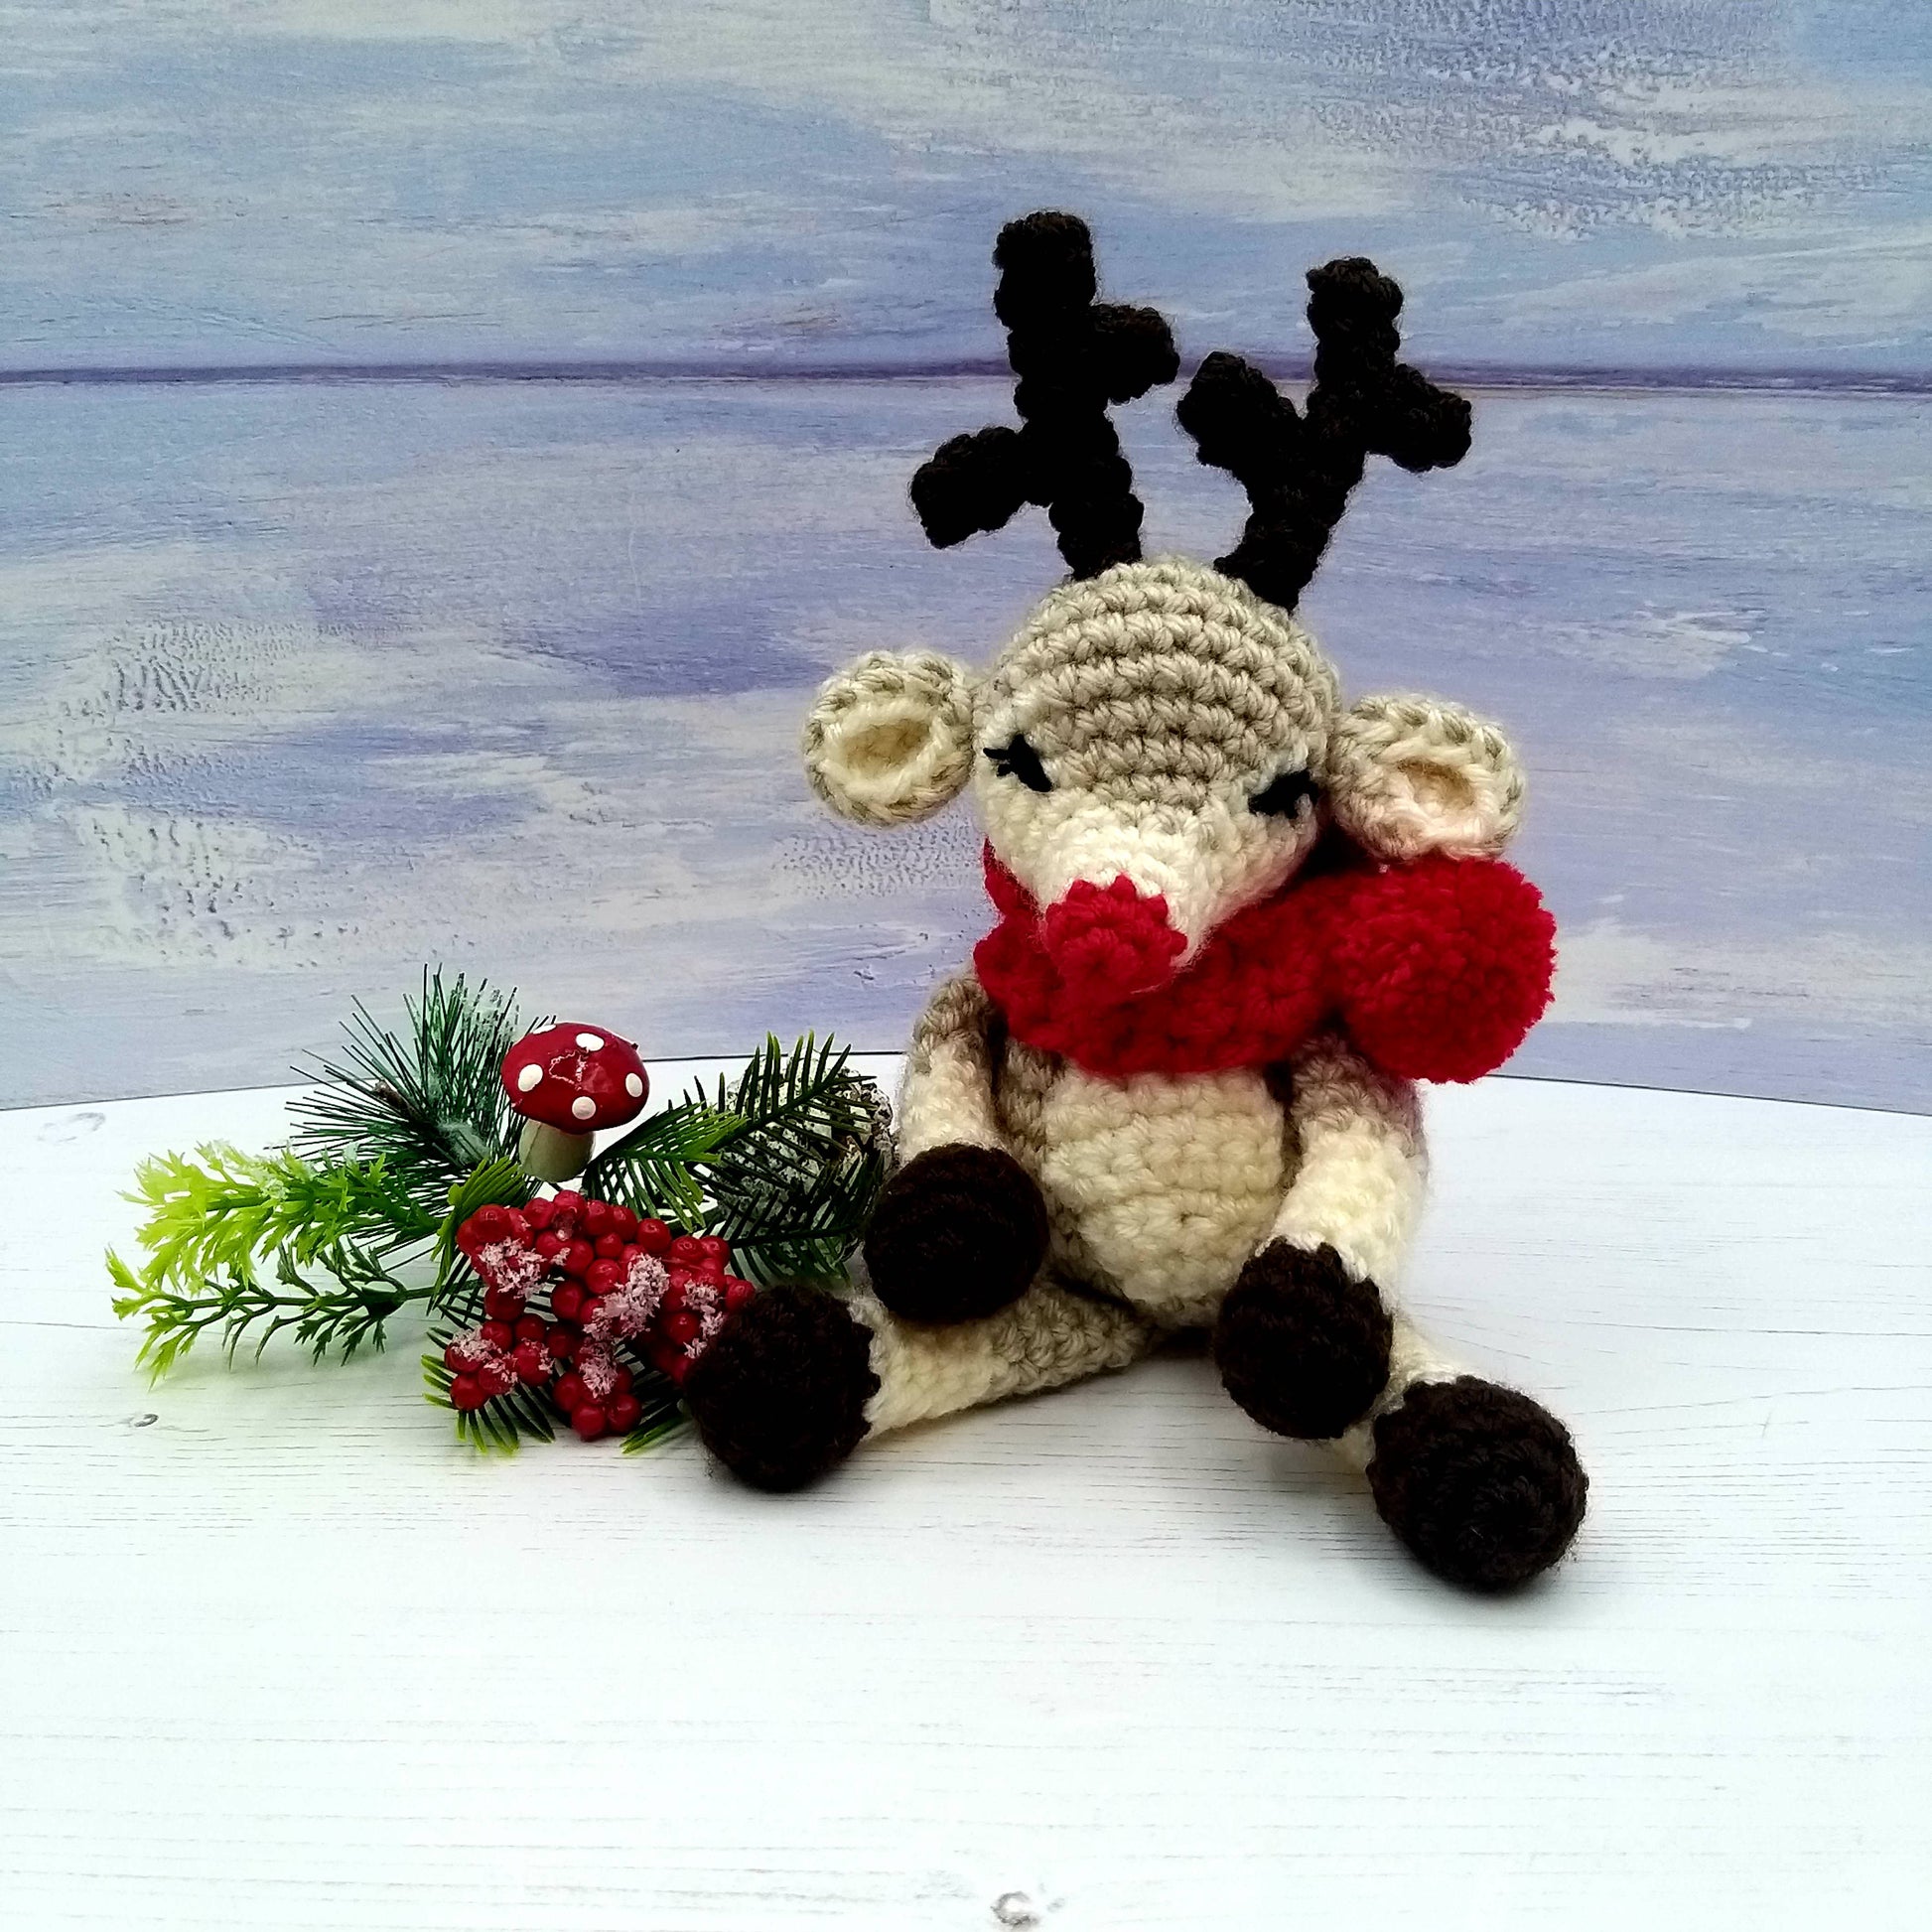 Crochet Reindeer Mini Kit - Christmas Crochet Kits & Gifts – Wee